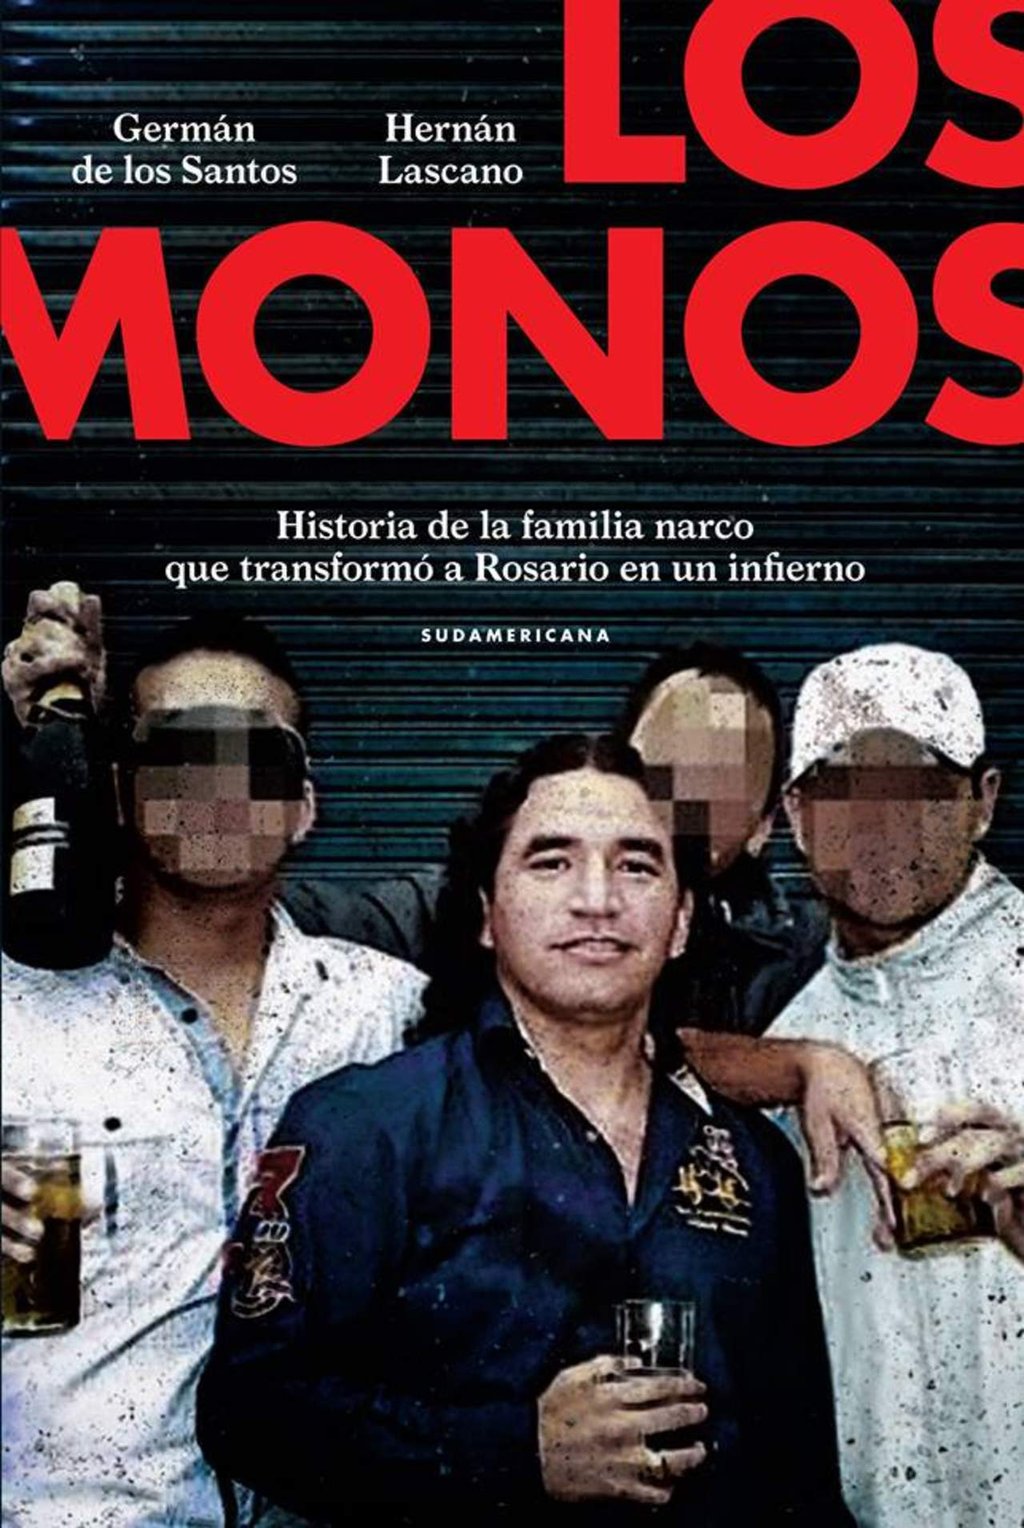 Interrumpen presentación de libro sobre narco en Argentina